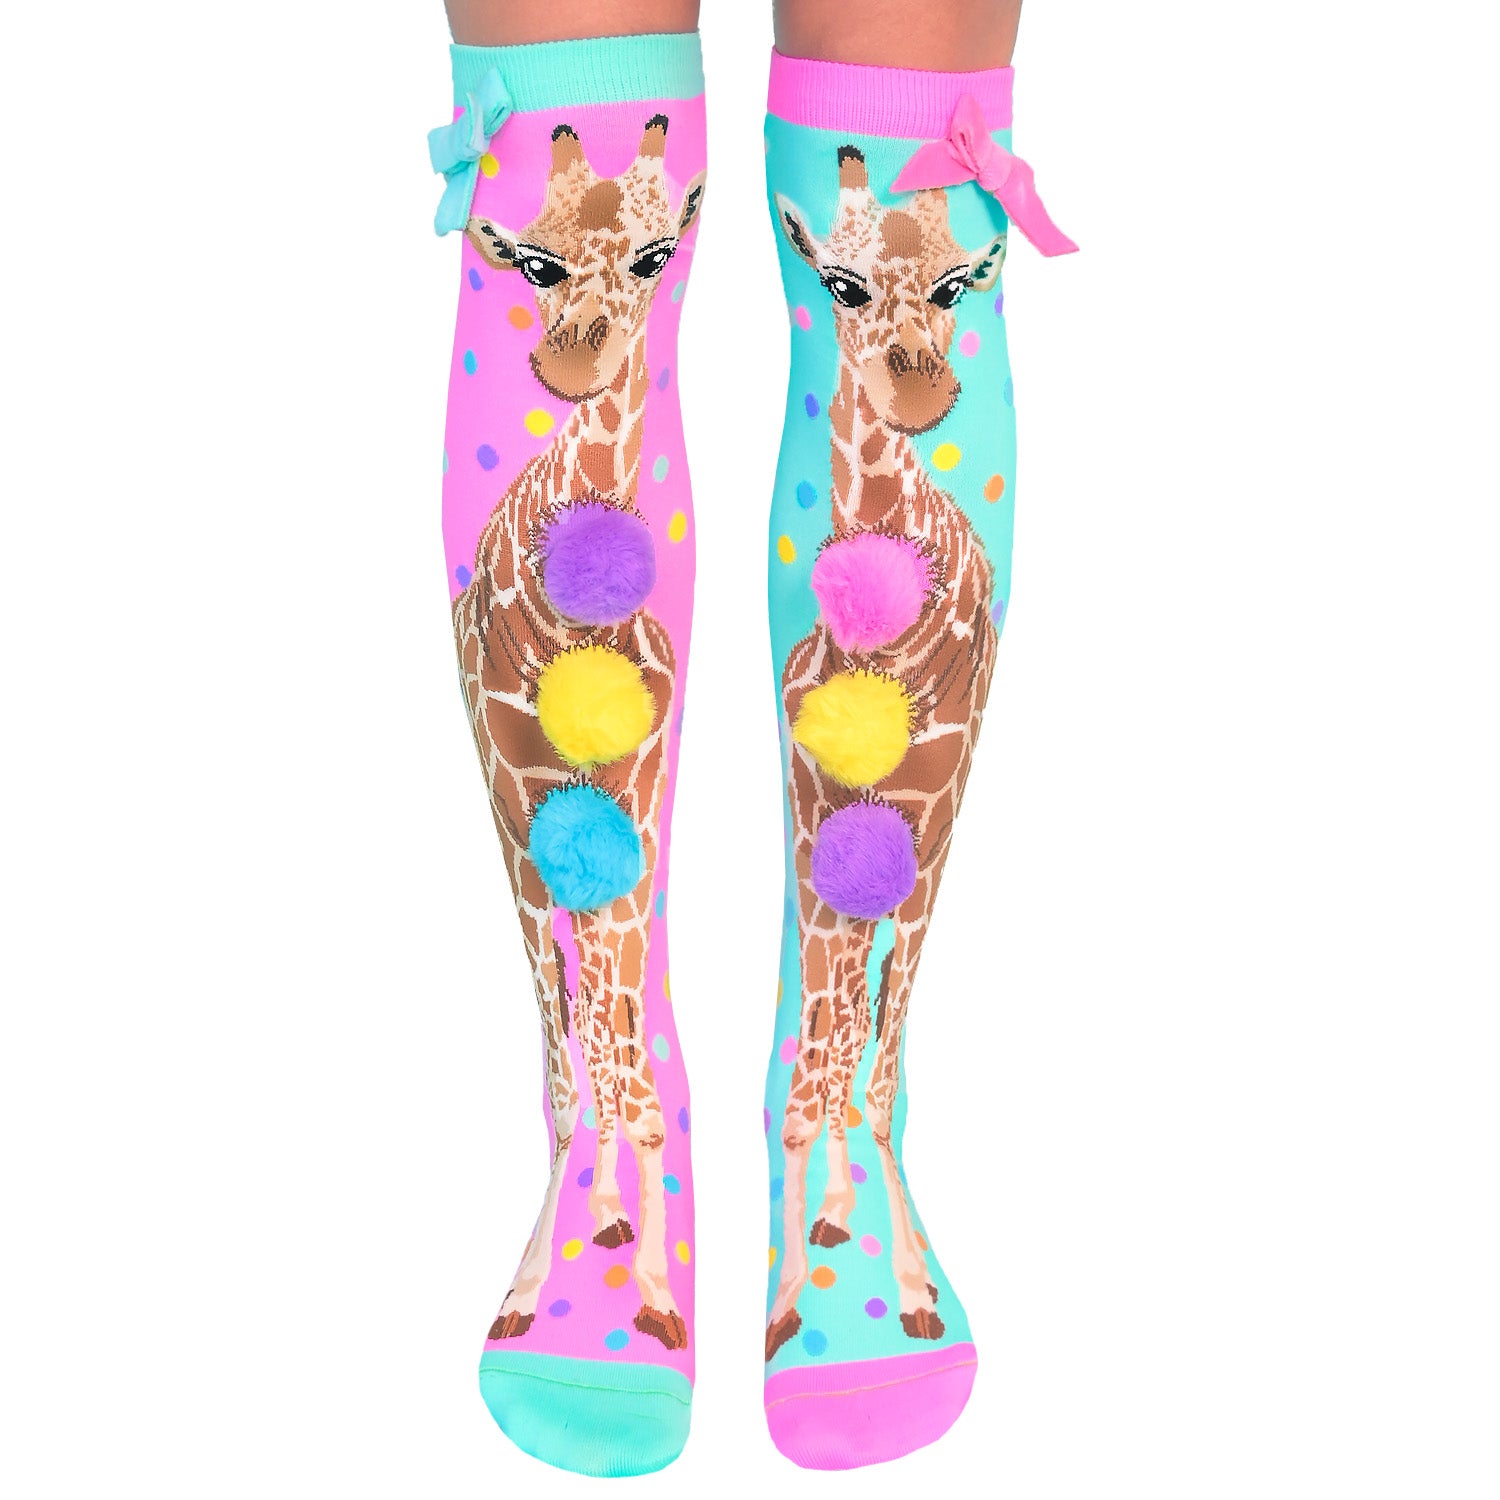 MadMia Designer Socks - Teens/Tweens/Adults